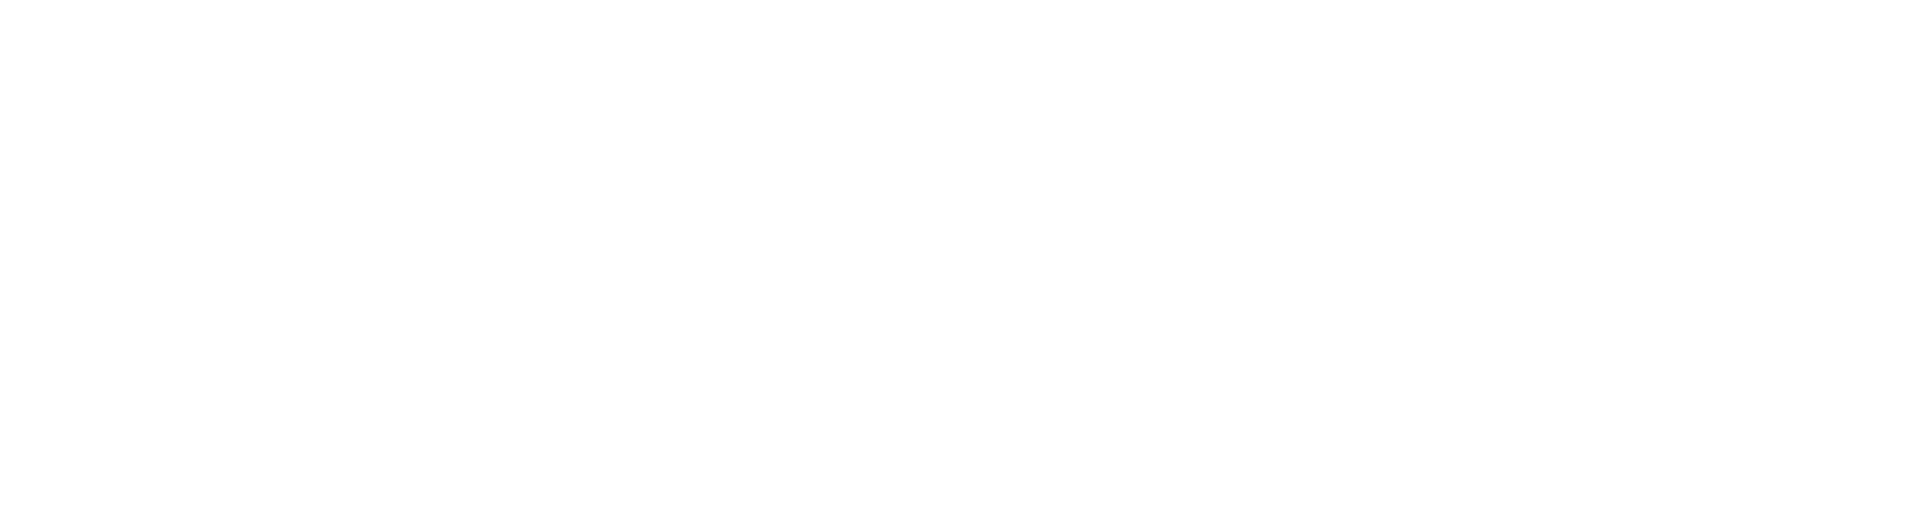 Nonproliferation Portal logo